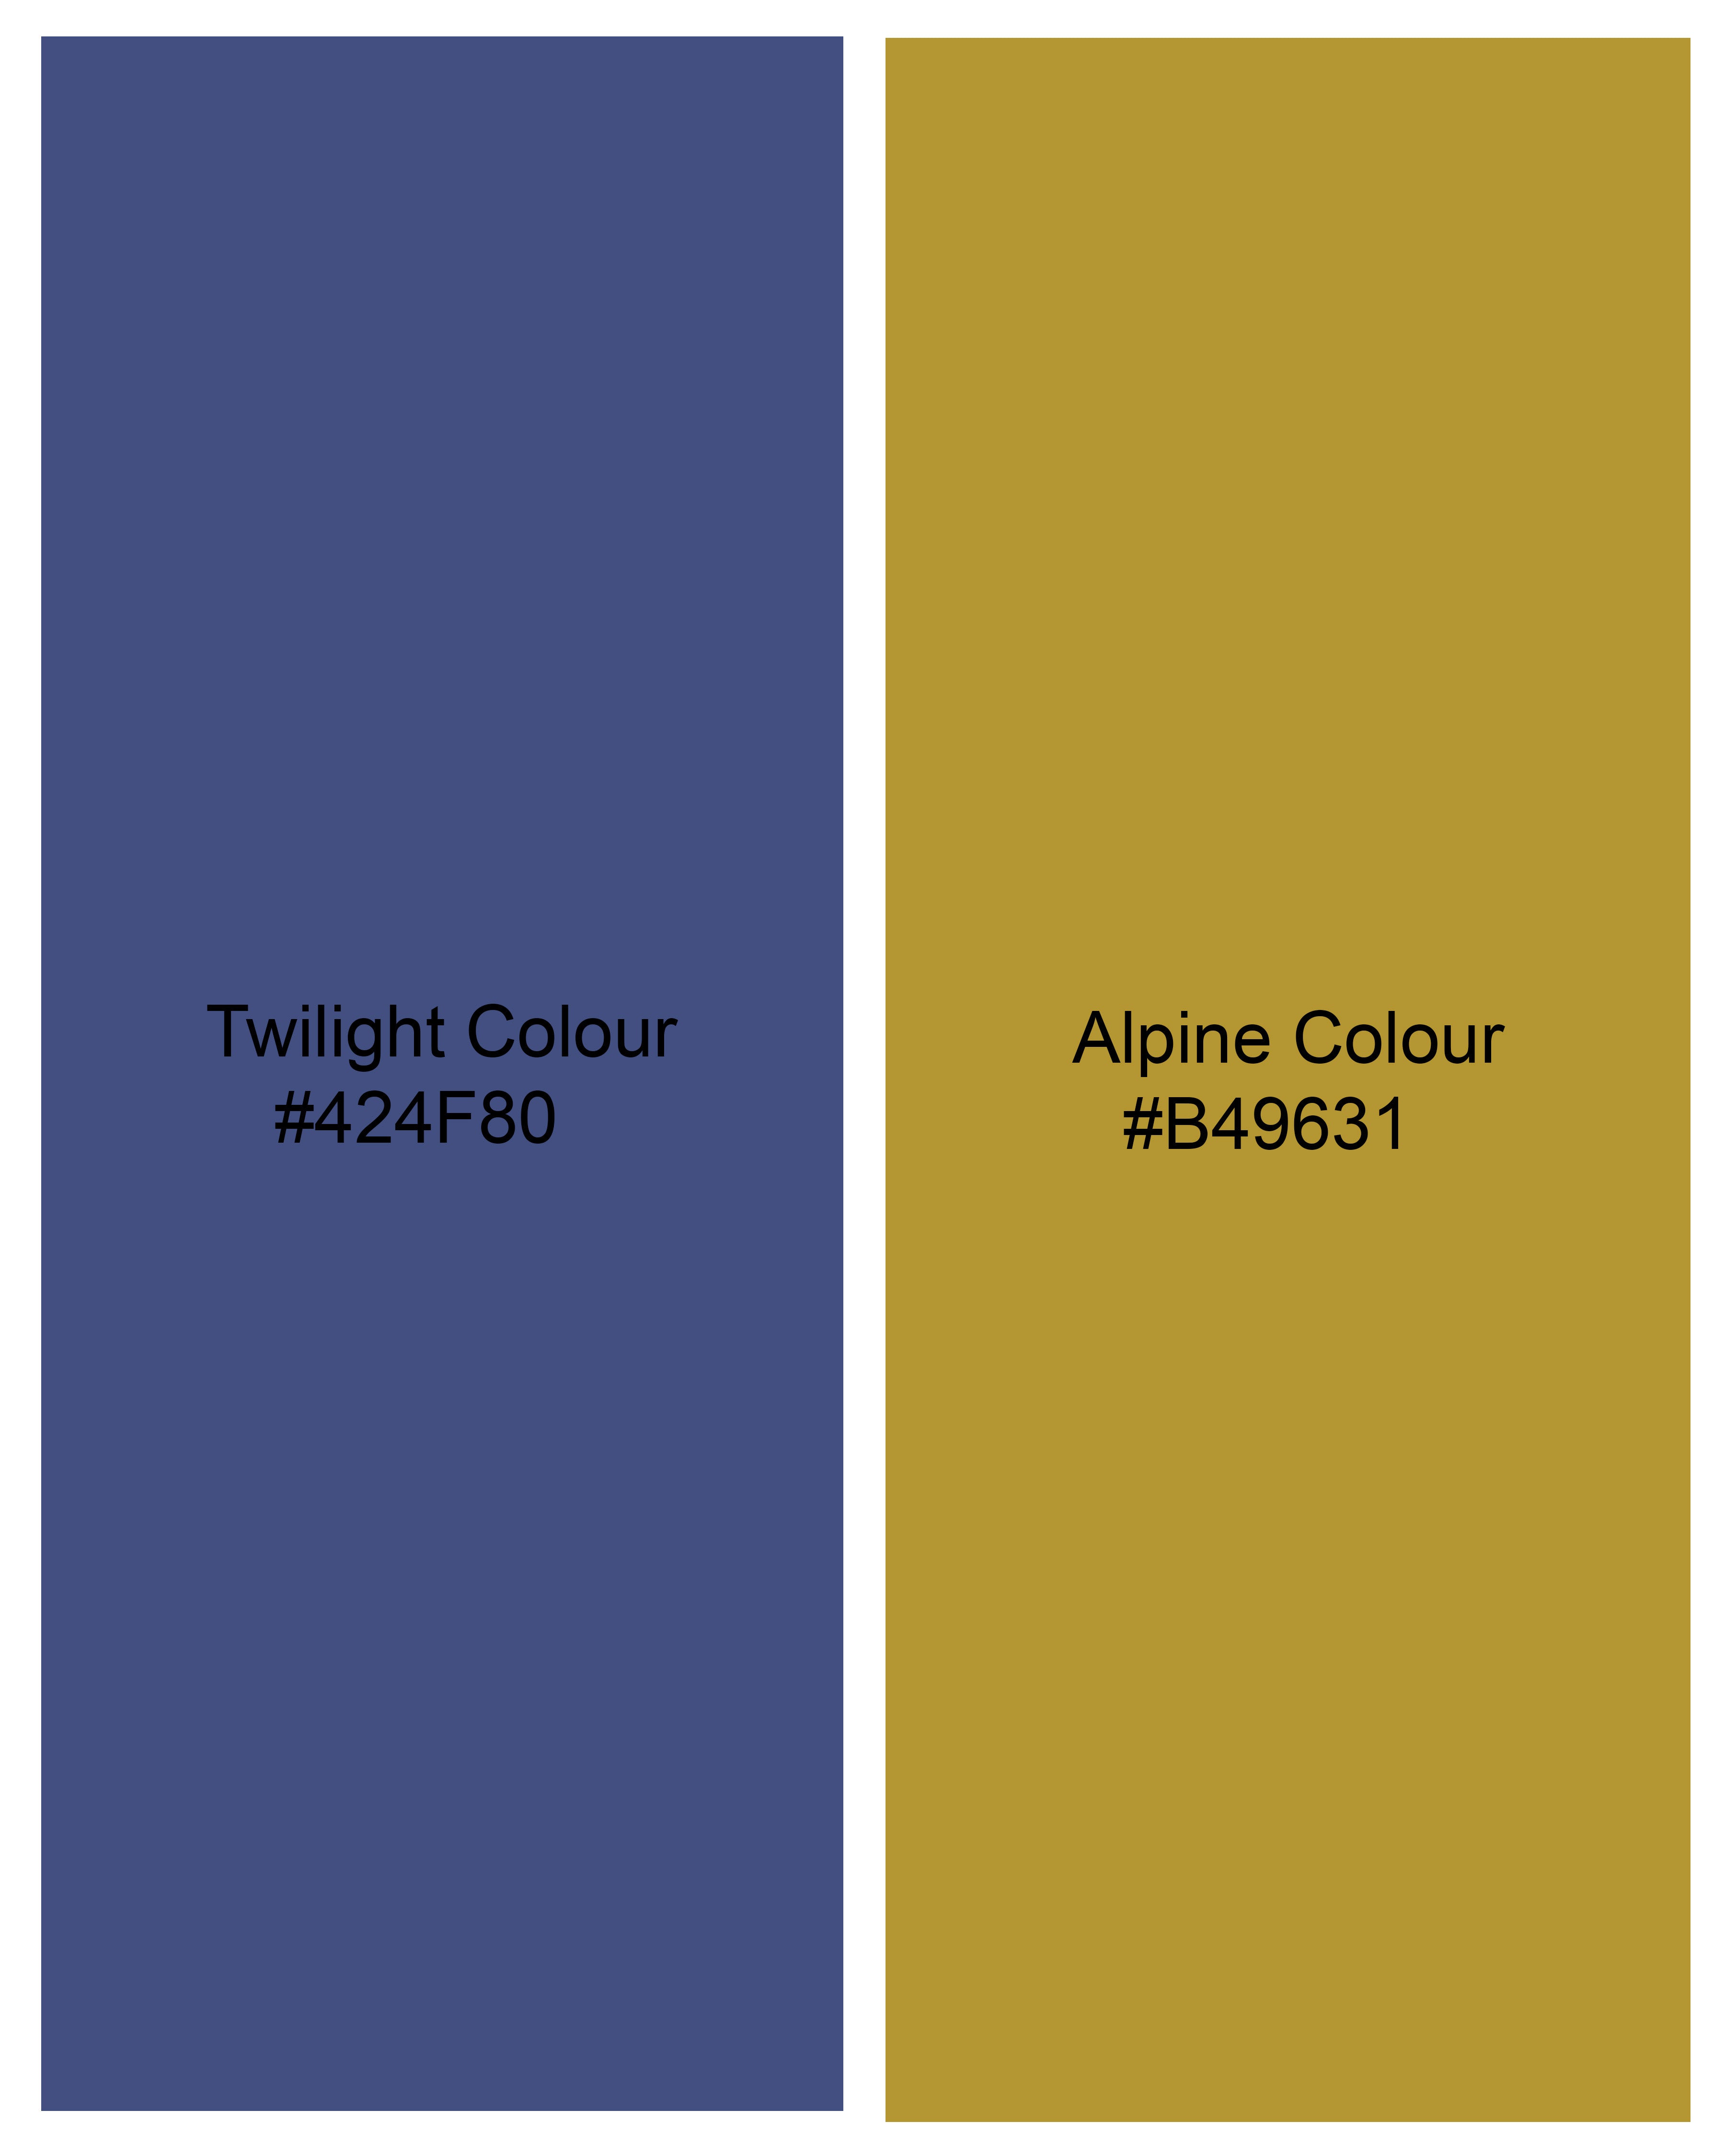 Twilight Blue with Alpine Brown Plaid Cross Buttoned Bandhgala Blazer BL2488-CBG2-36, BL2488-CBG2-38, BL2488-CBG2-40, BL2488-CBG2-42, BL2488-CBG2-44, BL2488-CBG2-46, BL2488-CBG2-48, BL2488-CBG2-50, BL2488-CBG2-52, BL2488-CBG2-54, BL2488-CBG2-56, BL2488-CBG2-58, BL2488-CBG2-60